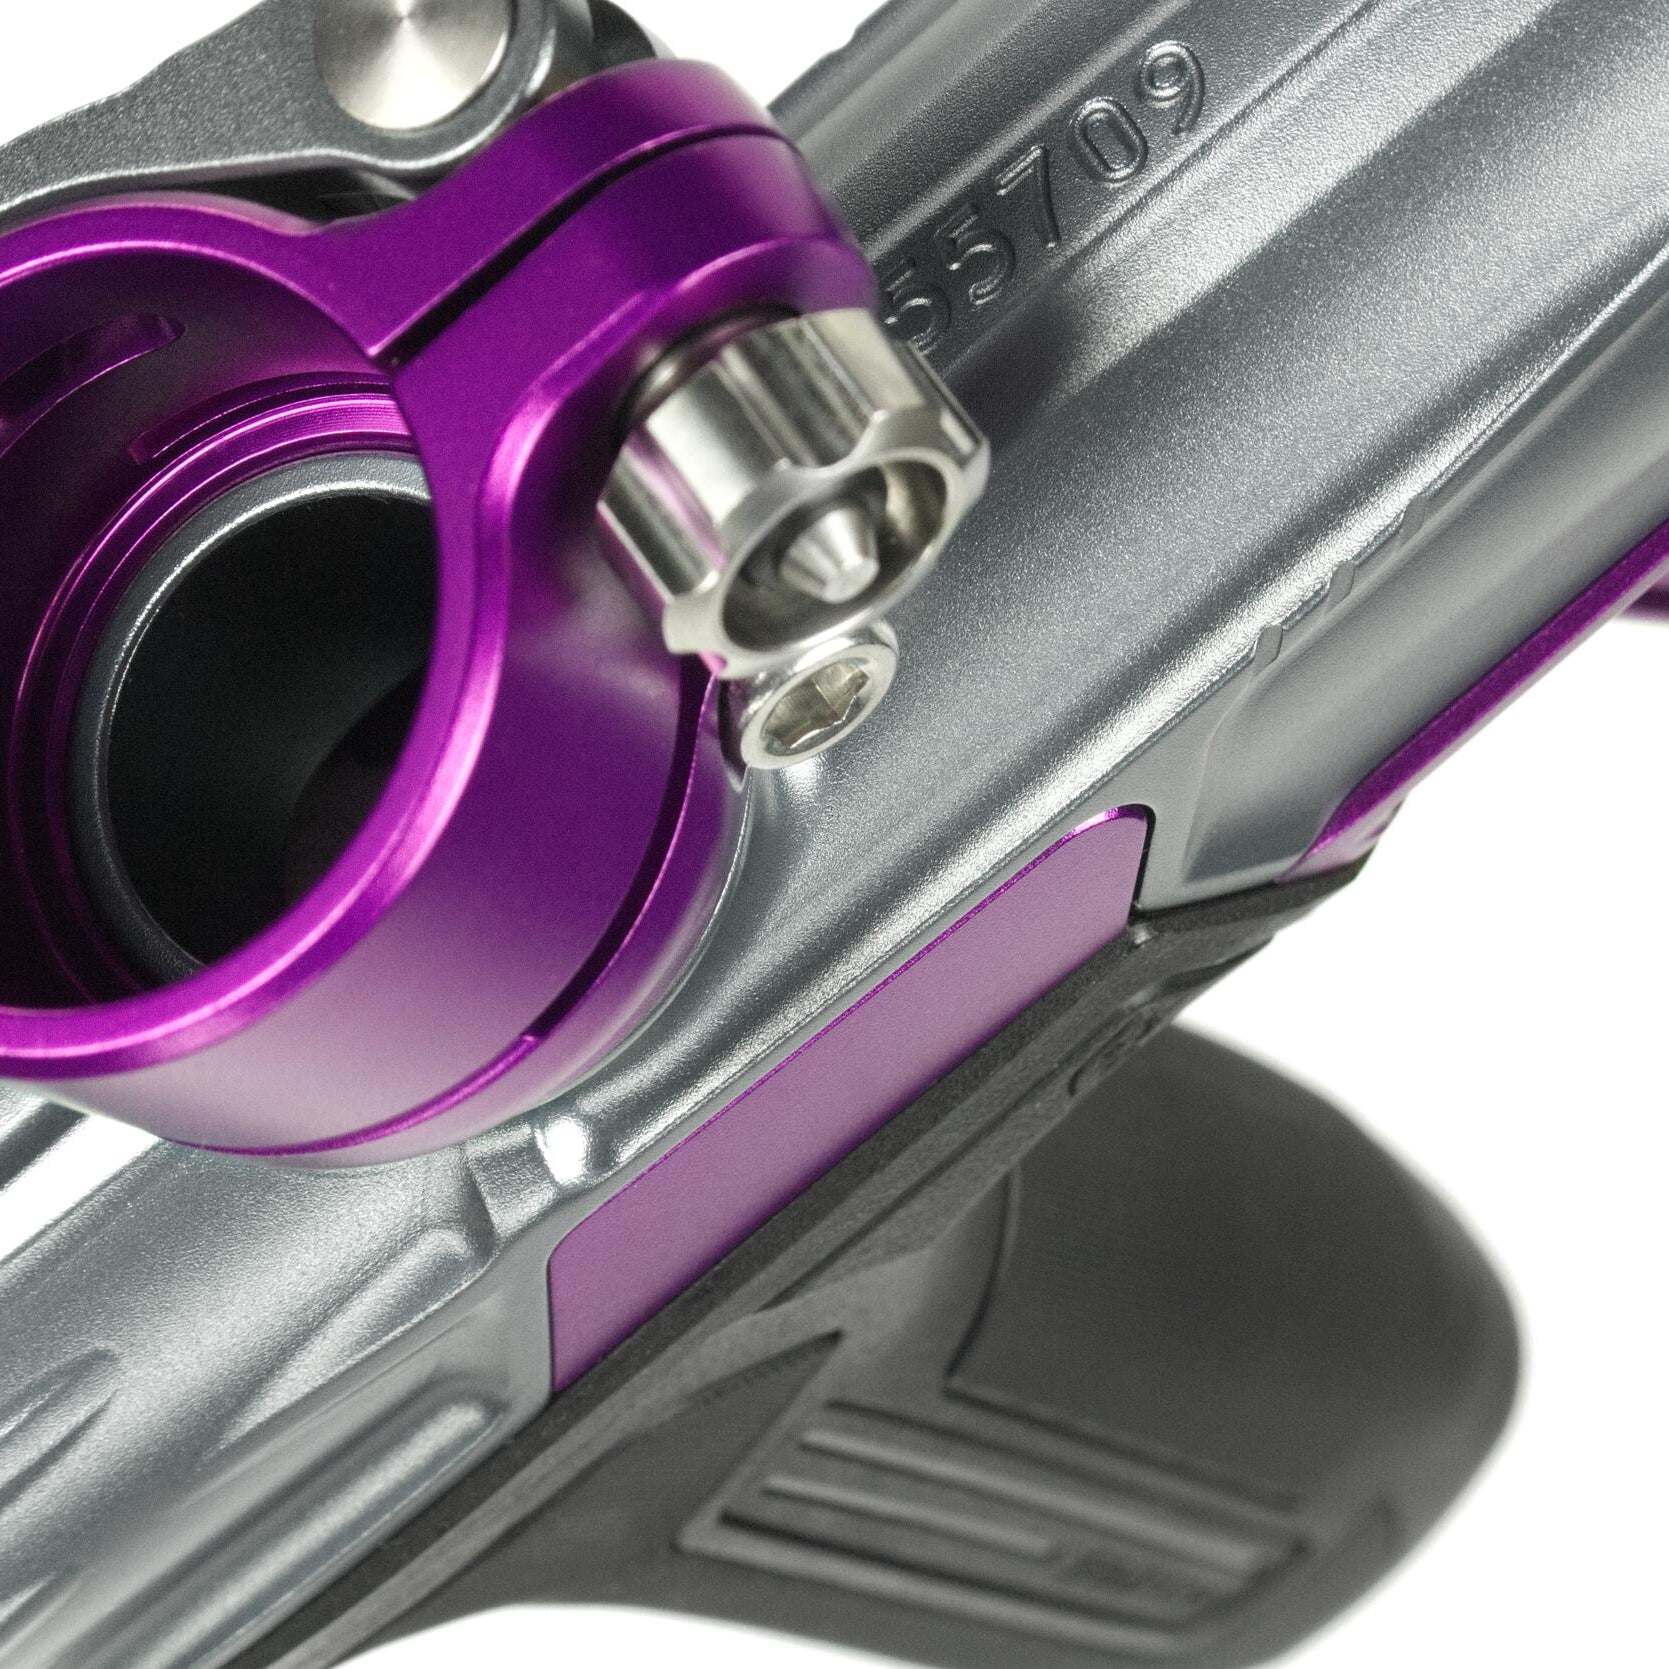 Planet Eclipse CS3 Paintball Gun- Silver/Purple